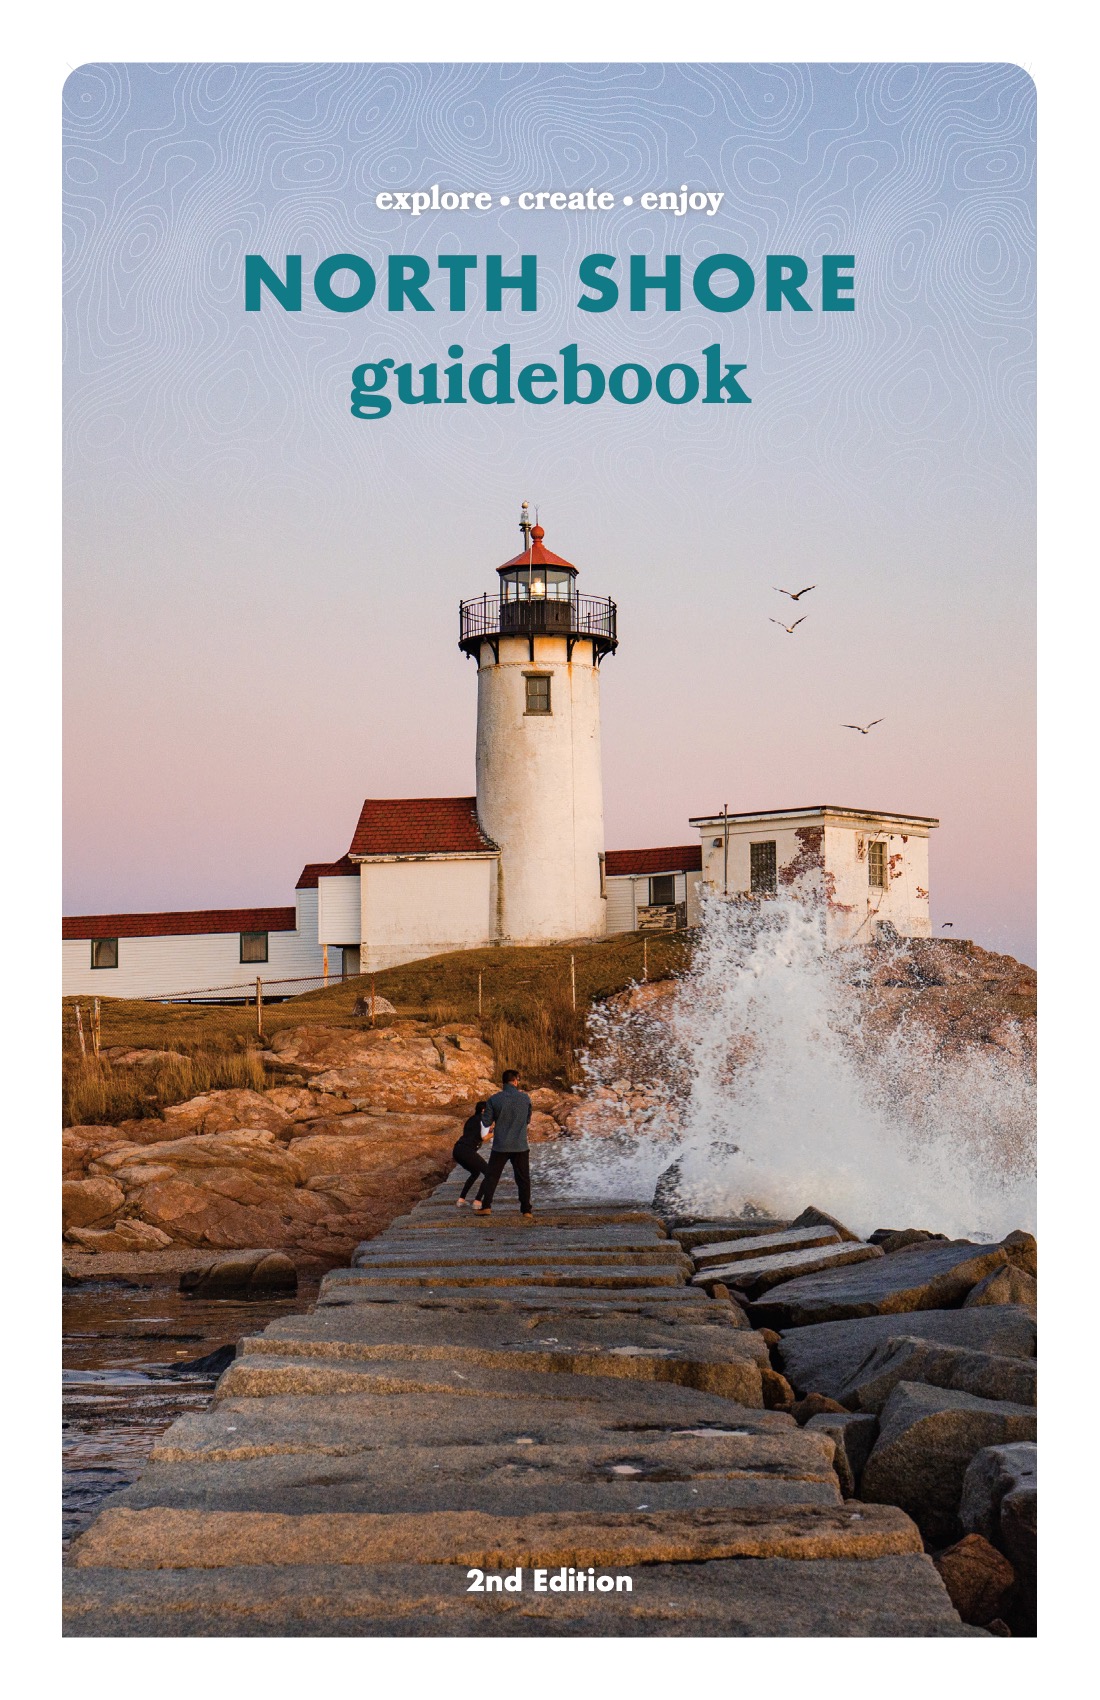 North Shore guidebook cover